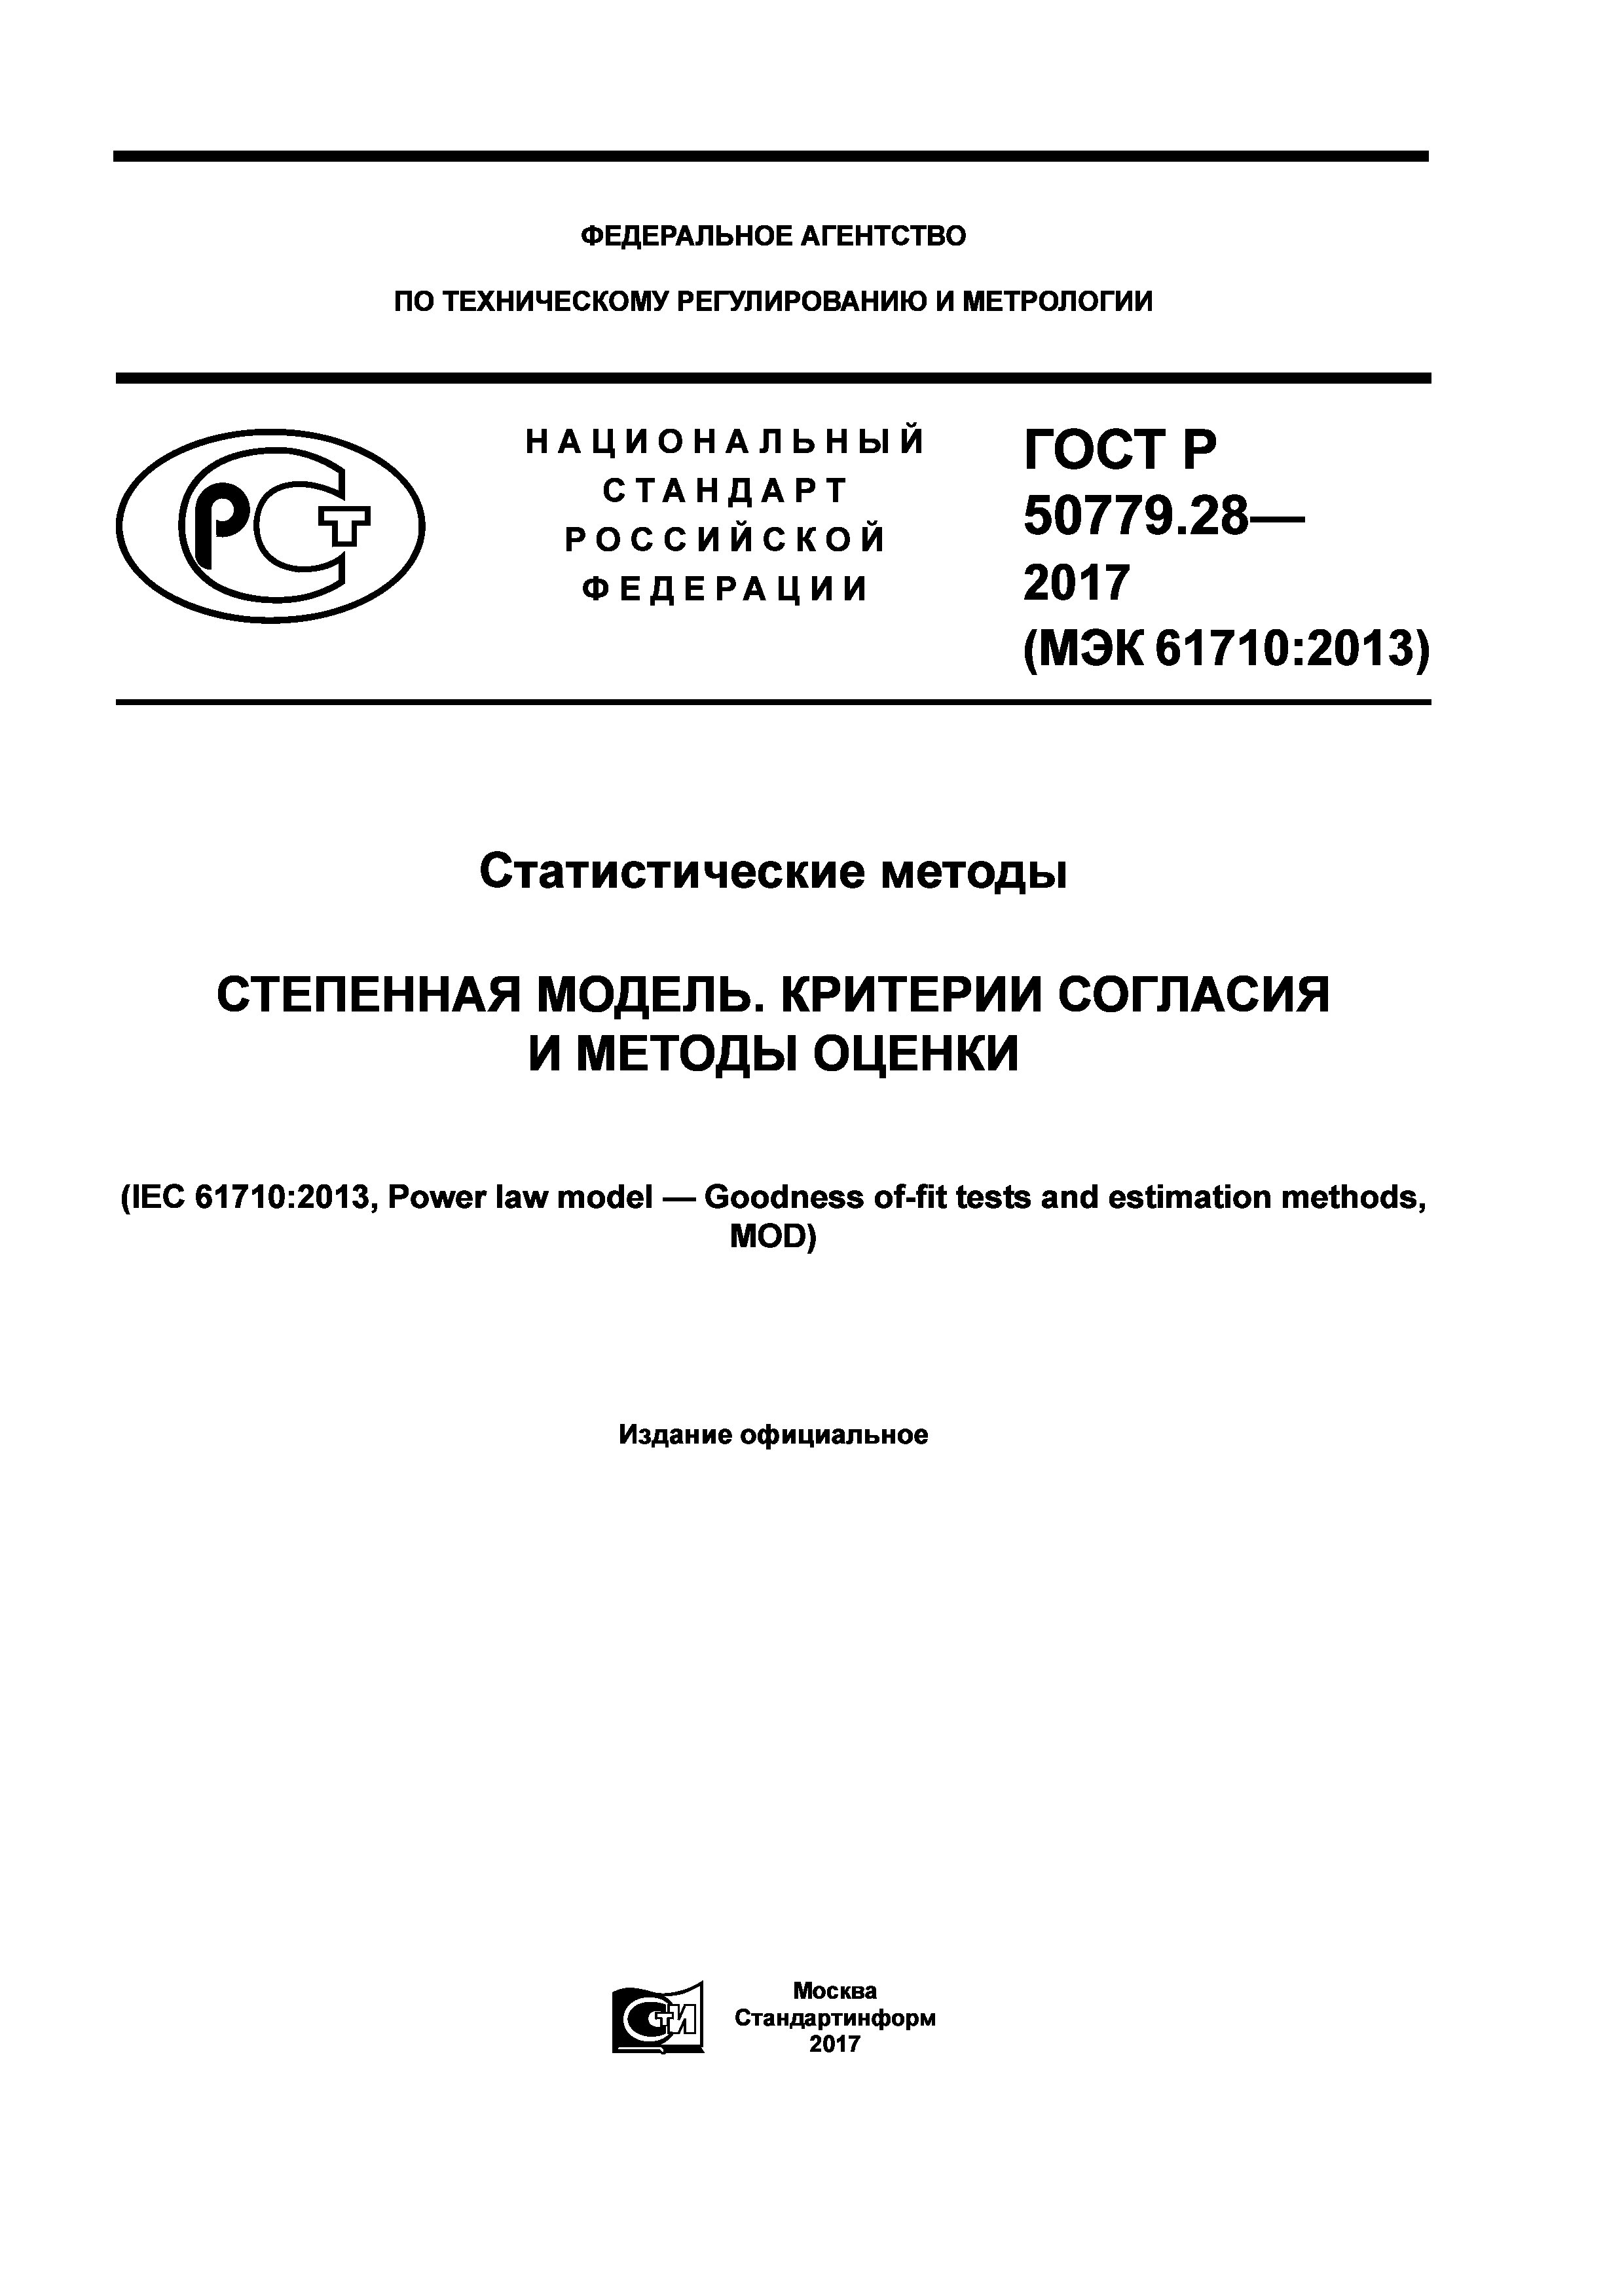 ГОСТ Р 50779.28-2017